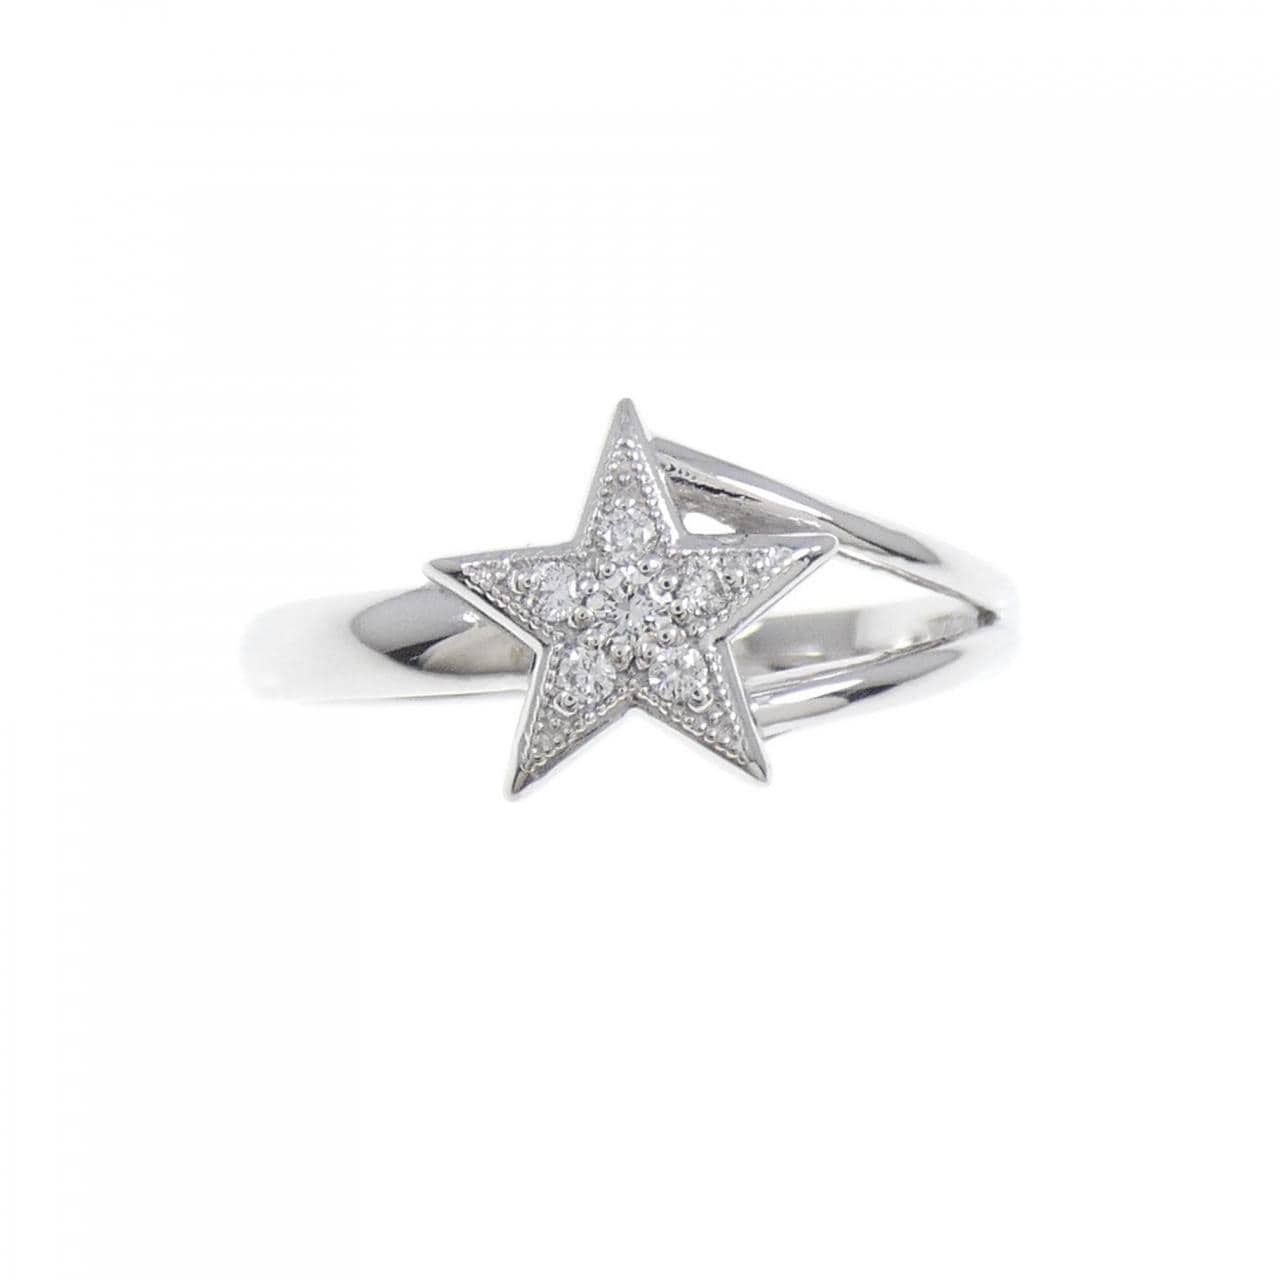 K18WG star Diamond ring 0.07CT